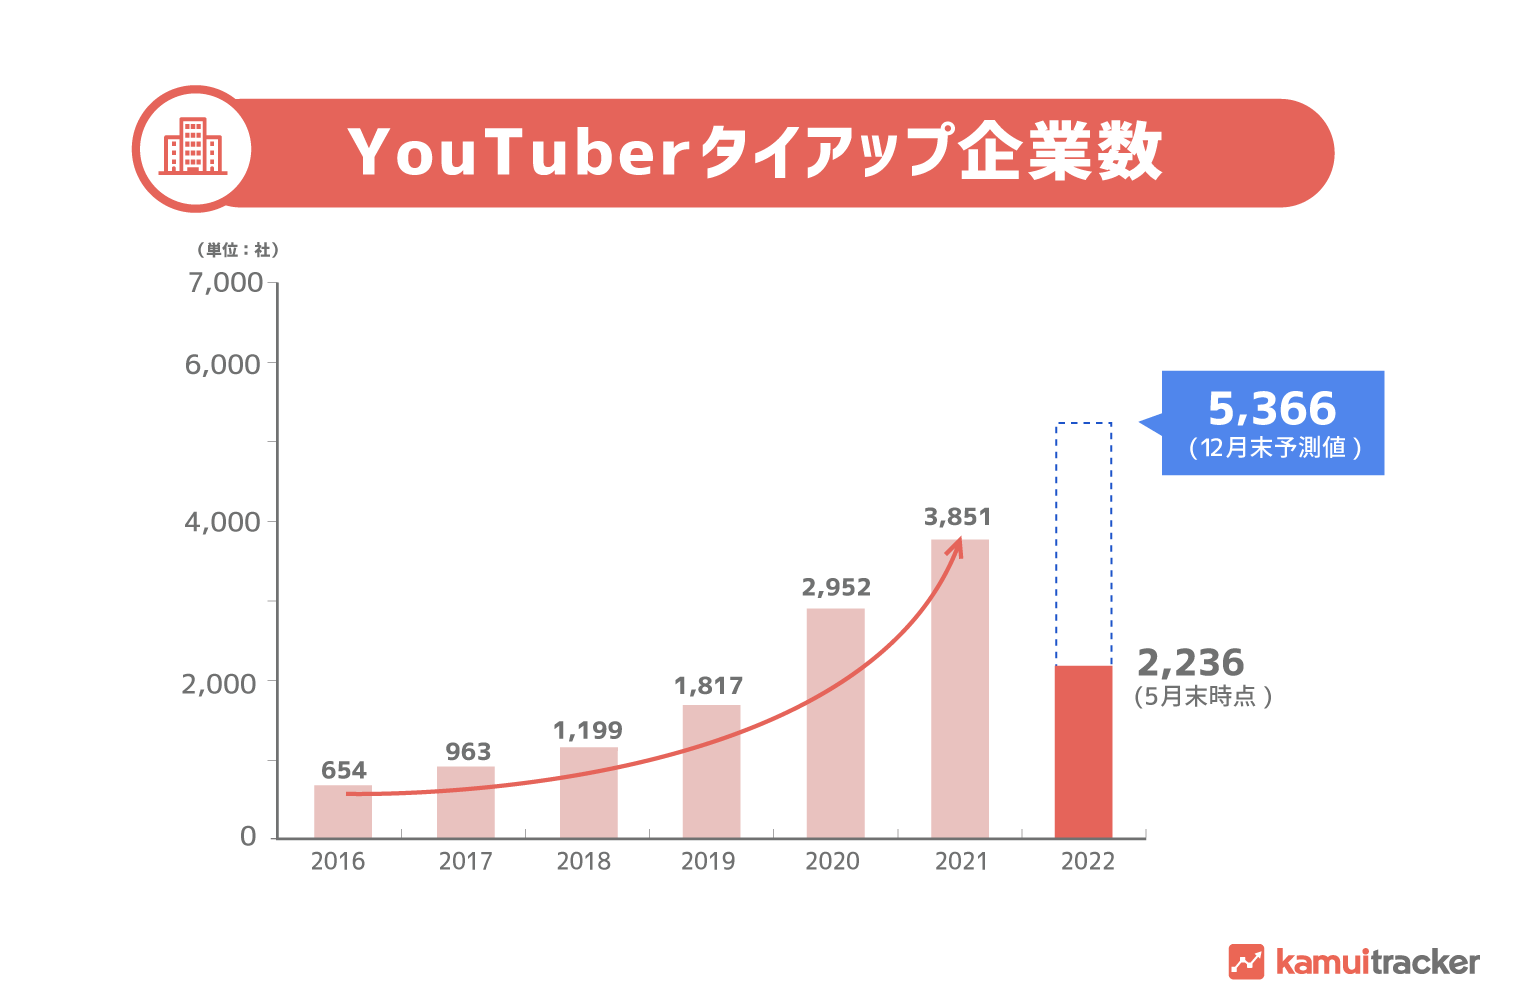 YouTuberタイアップ企業数の推移グラフ